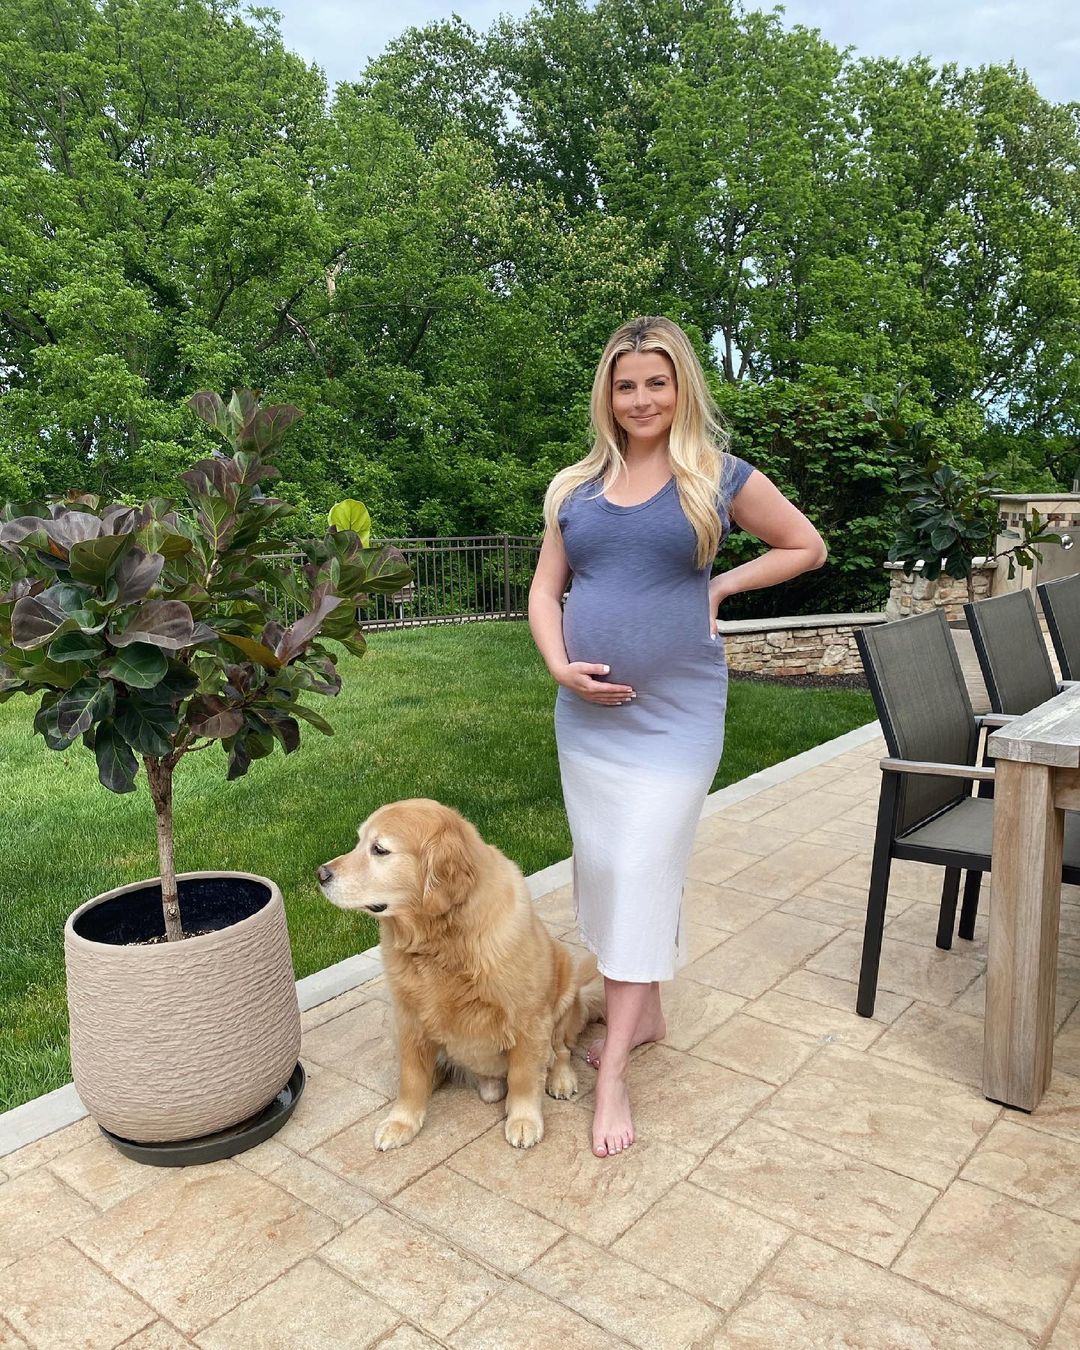 39 Weeks! Pregnant Lauren Sorrentino Shares ‘Last Bumpdate’ Photo